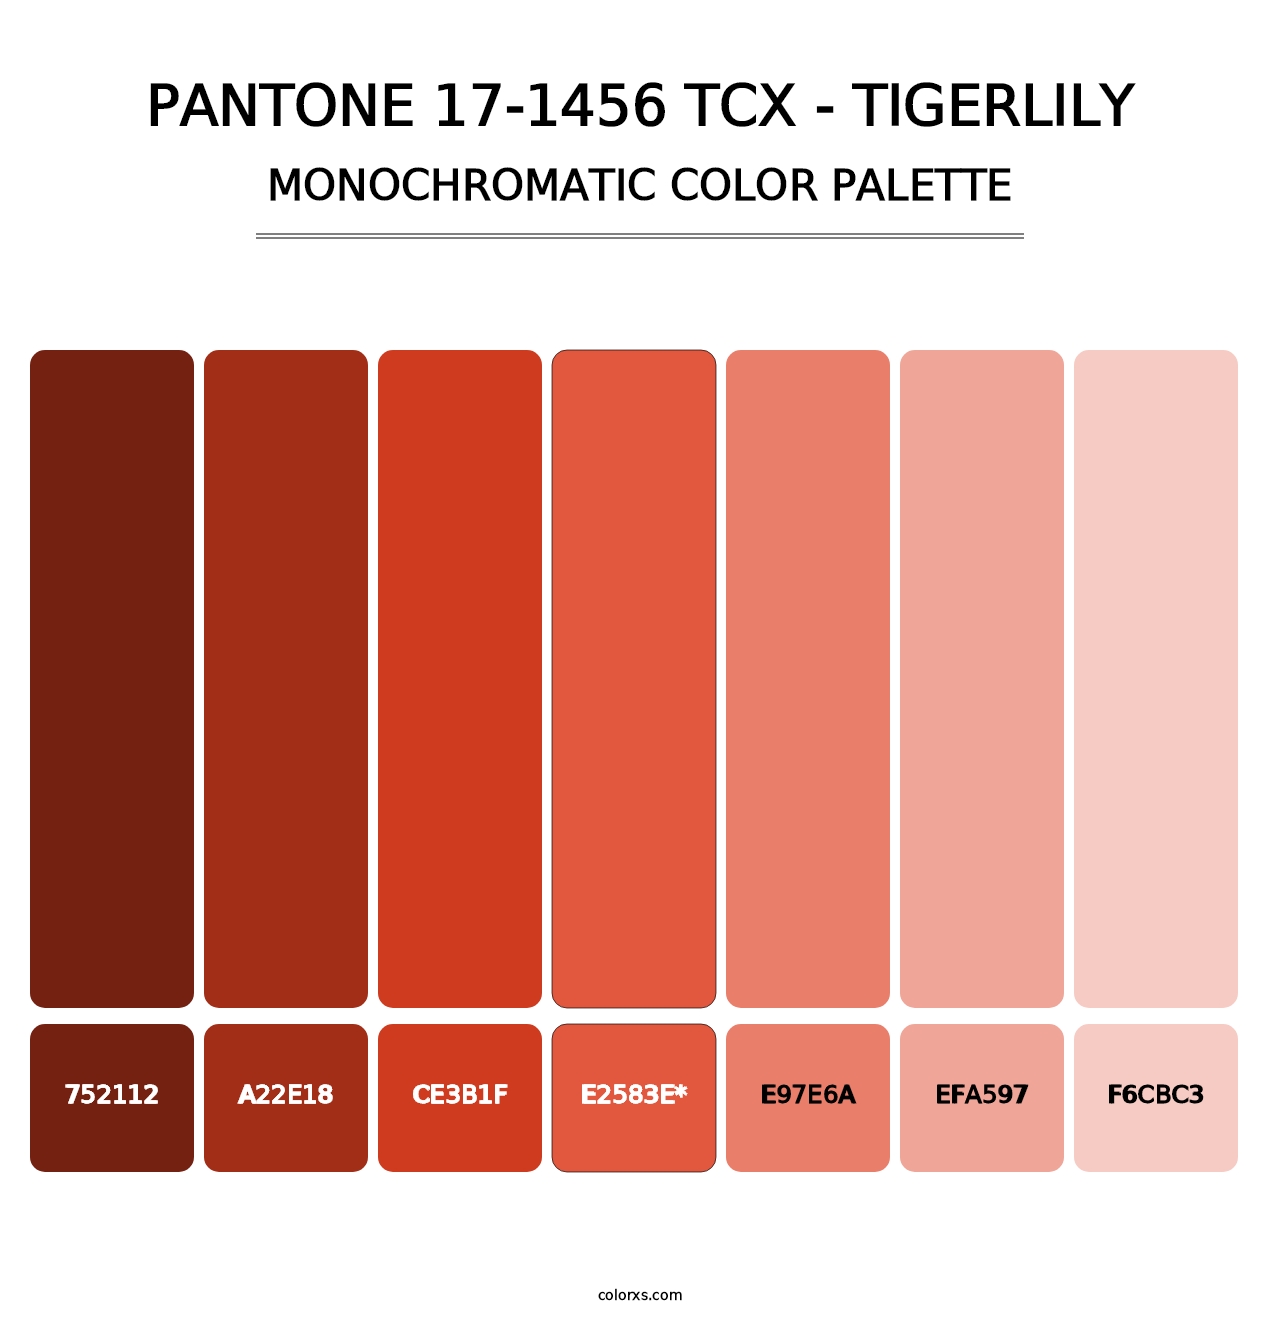 PANTONE 17-1456 TCX - Tigerlily - Monochromatic Color Palette